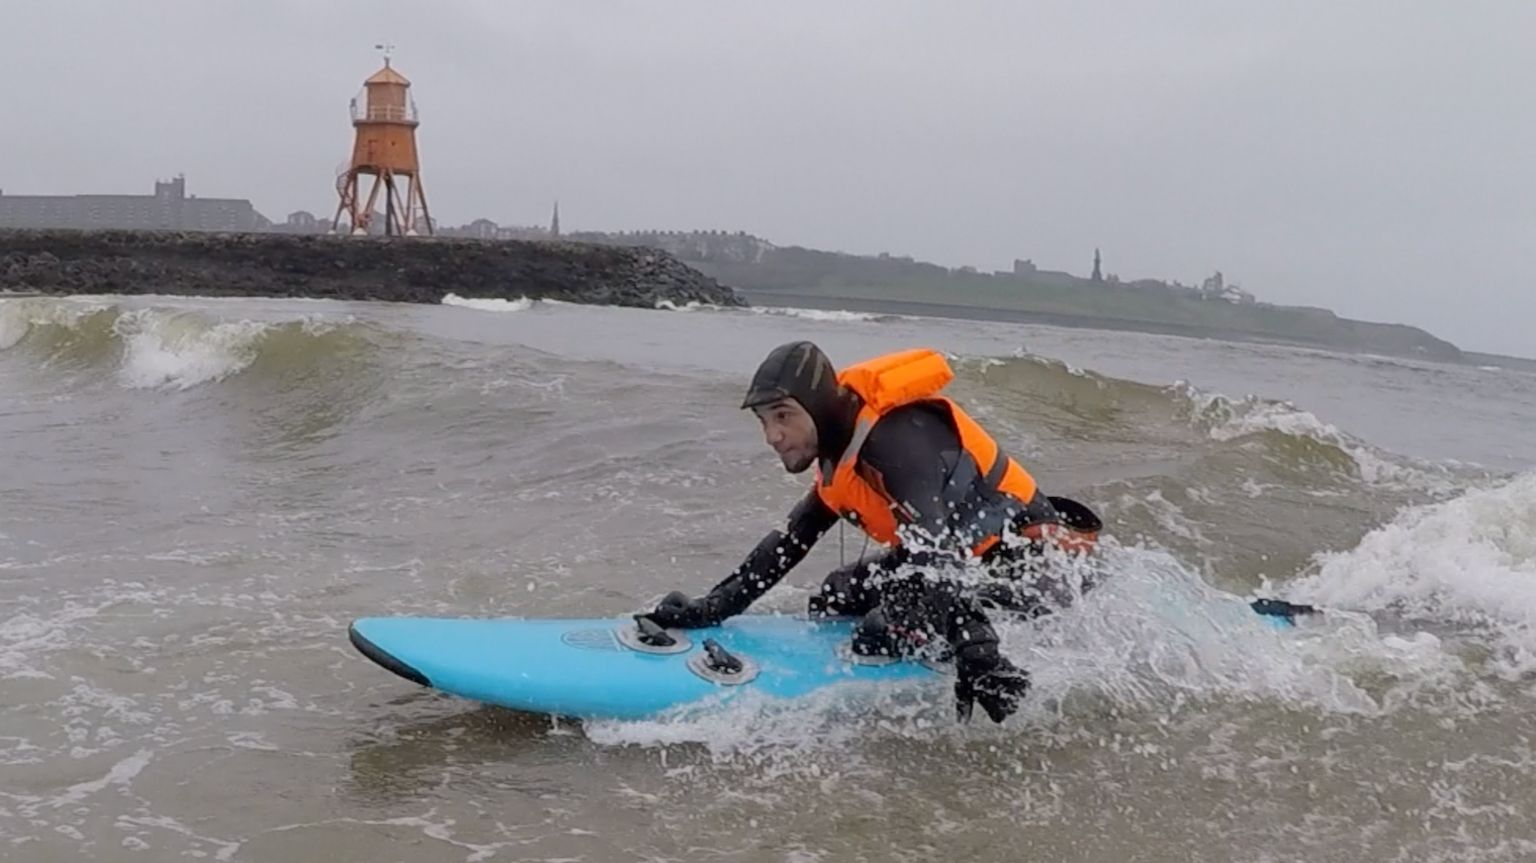 Jimmy on a surf board